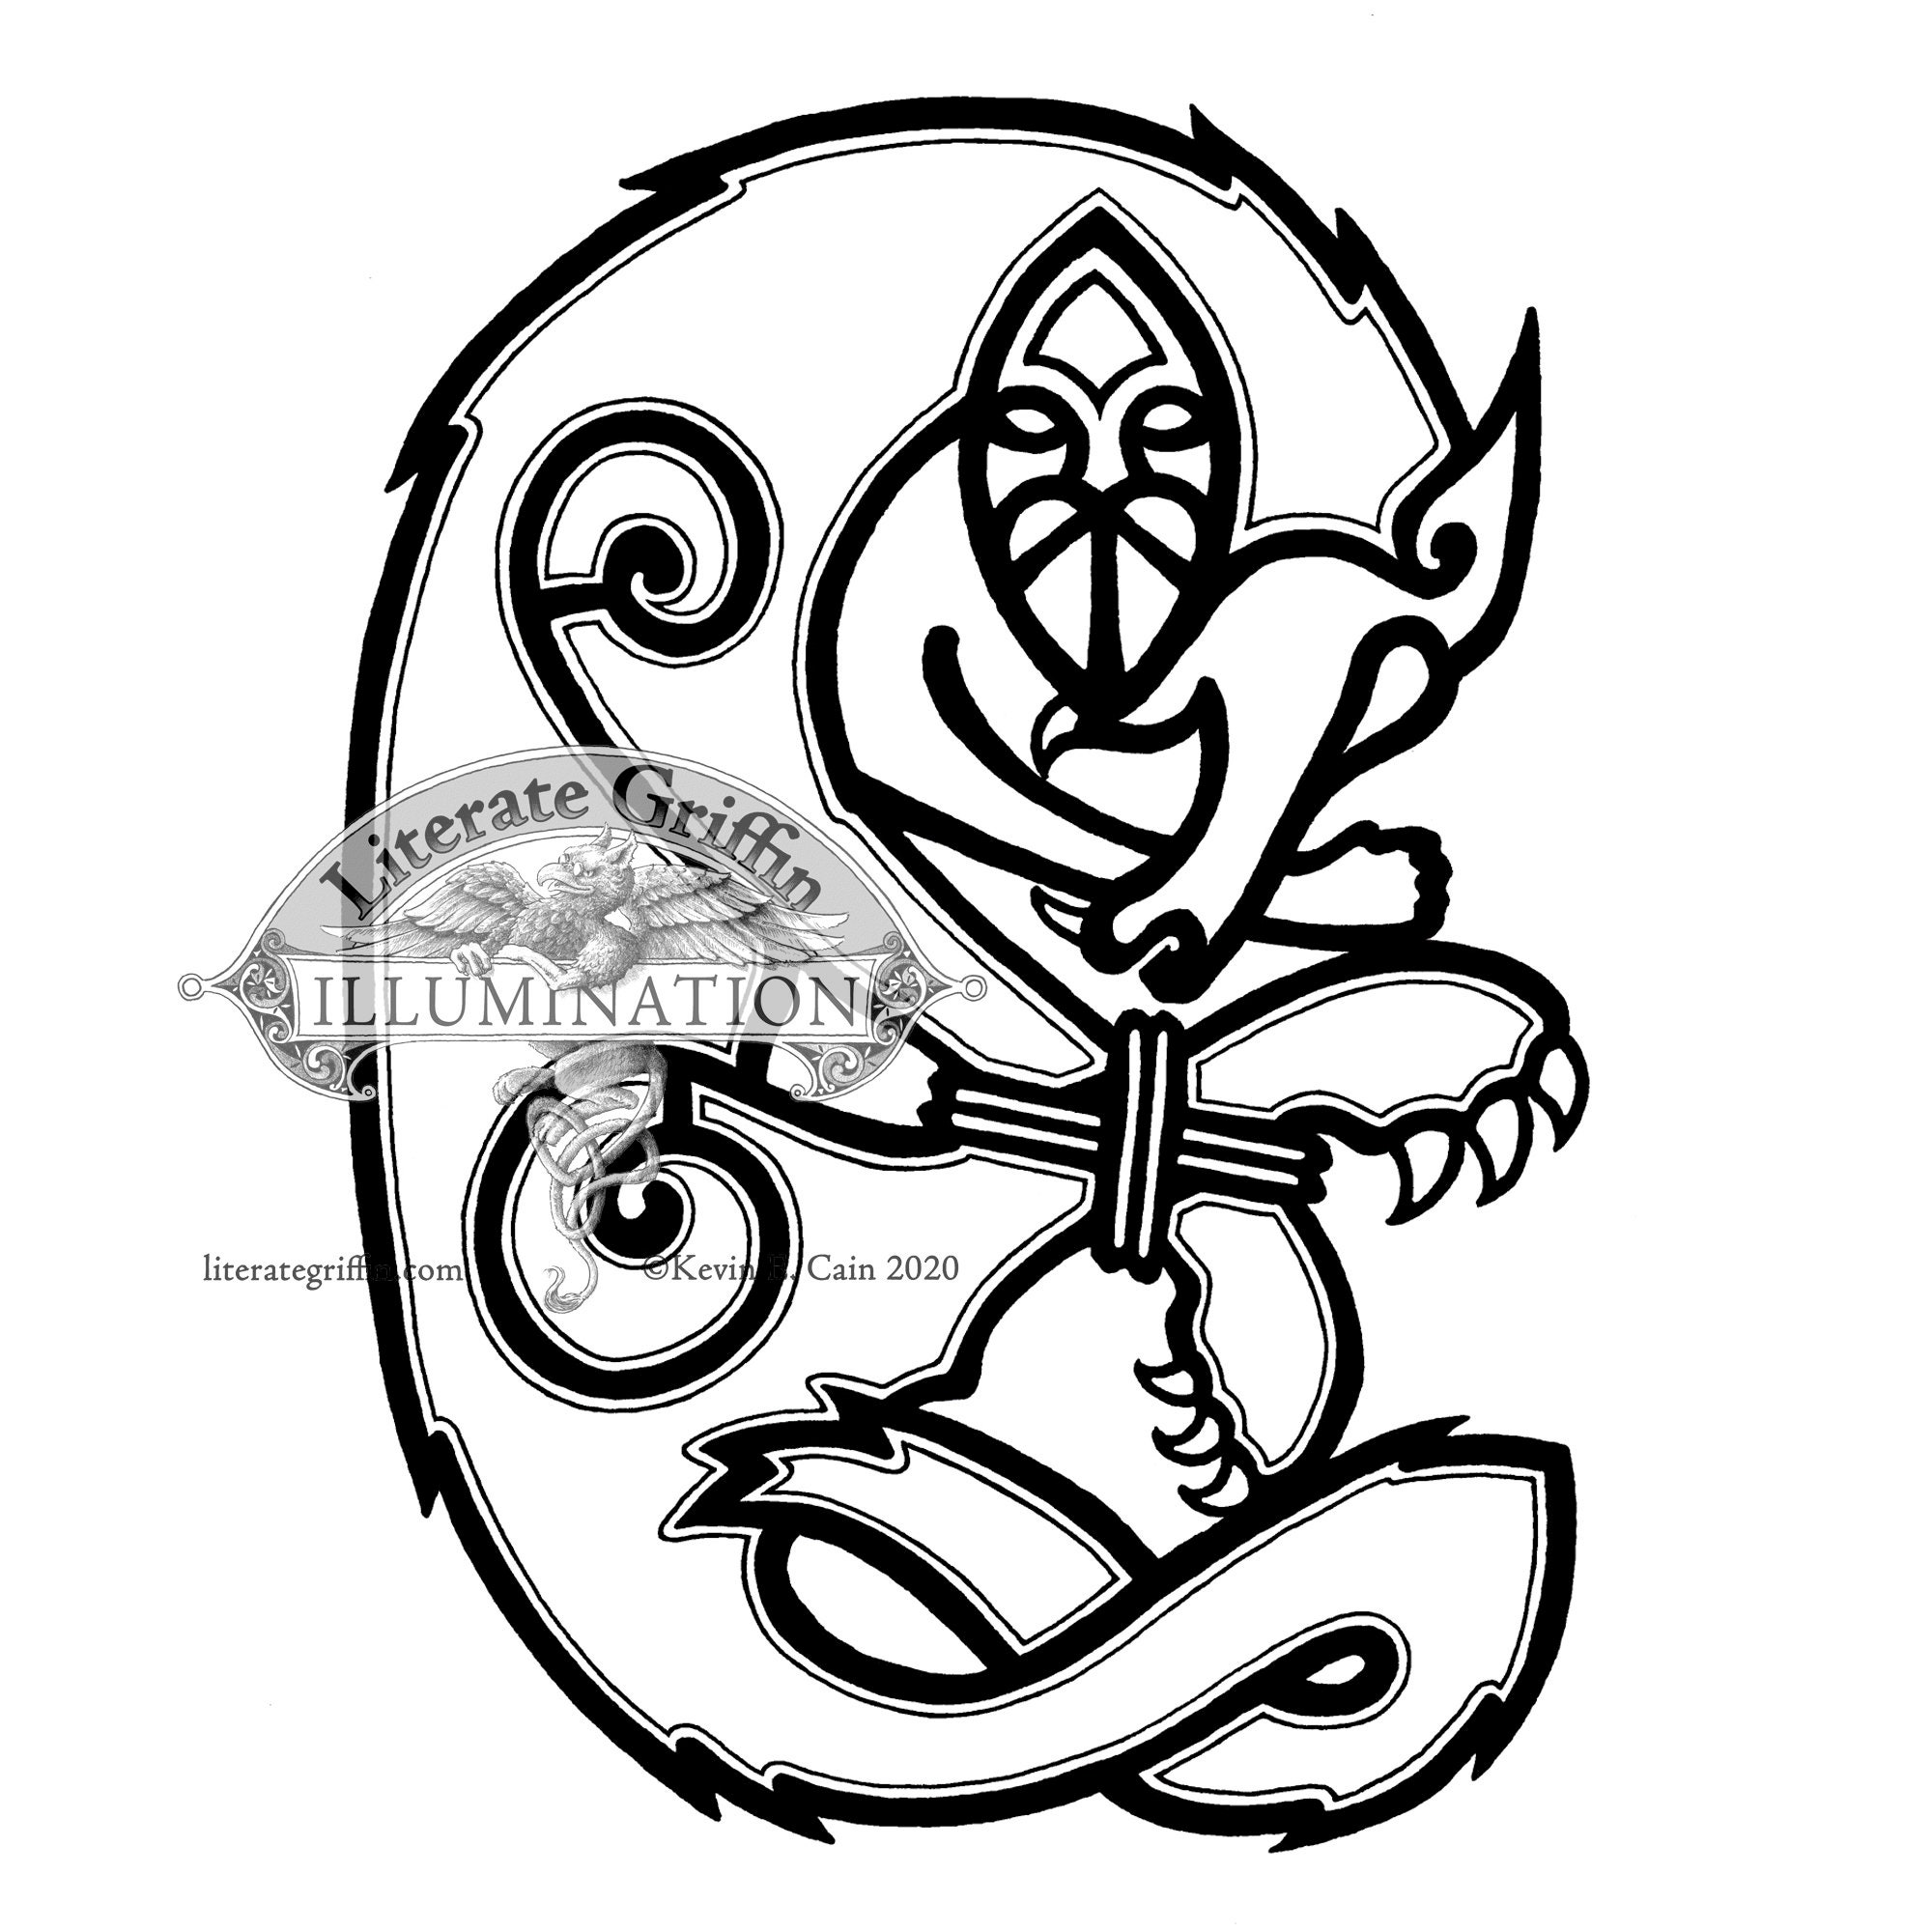 Deus Pascit Corvos  Norse mythology based tattoo design featuring the